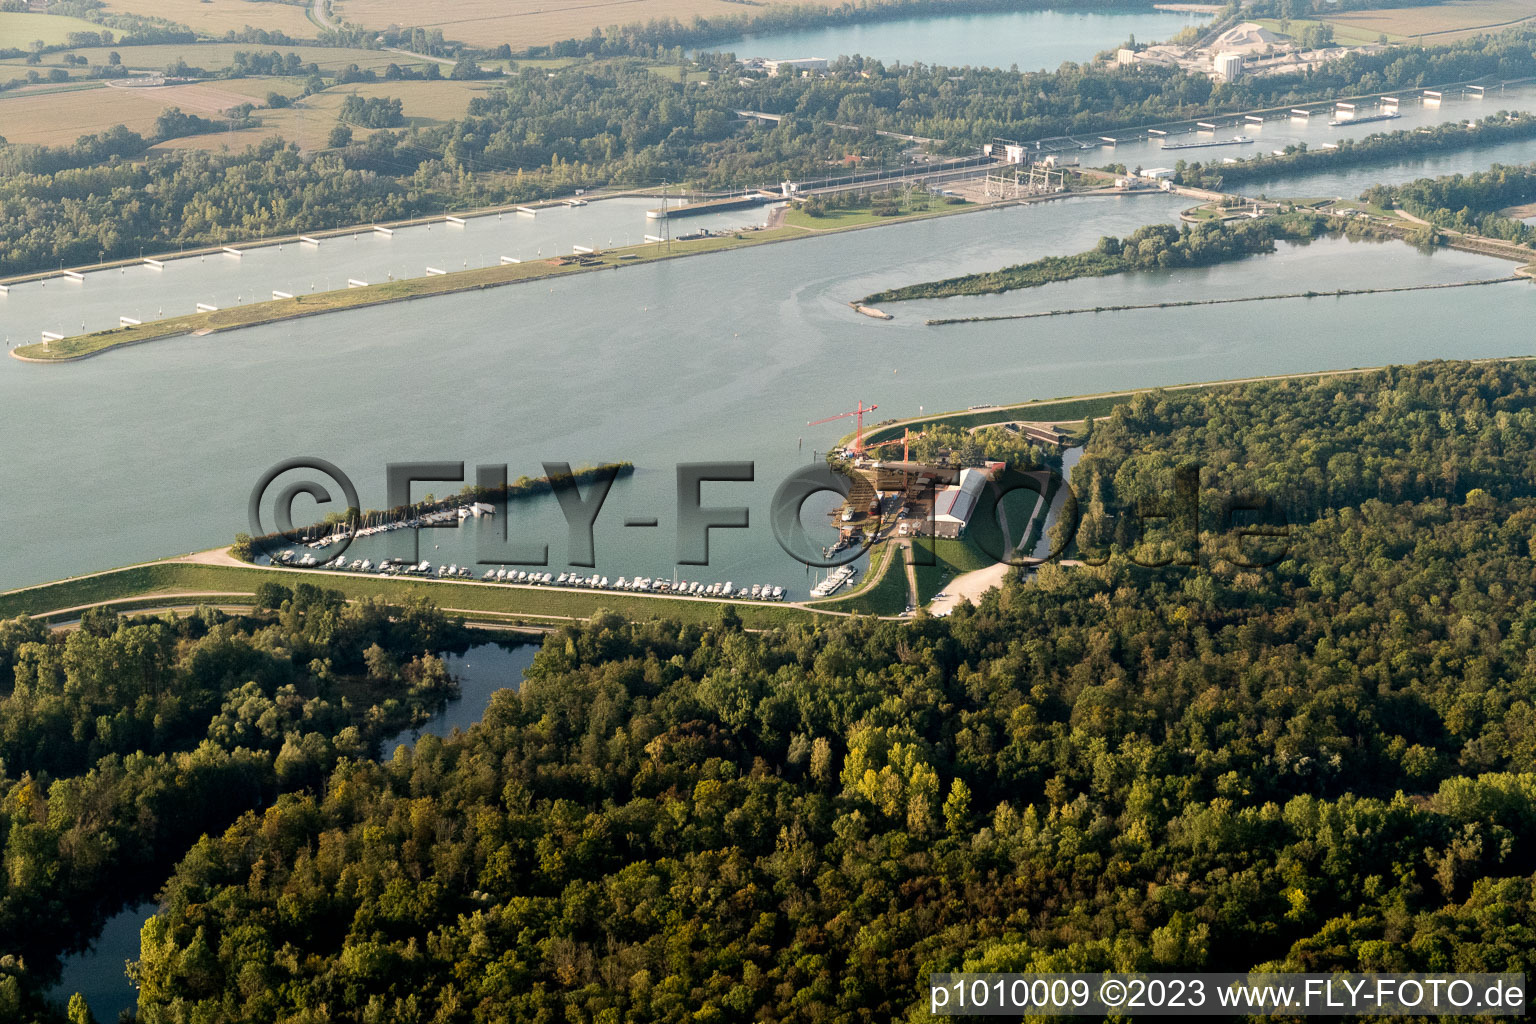 Aerial view of Karcher shipyard in the district Freistett in Rheinau in the state Baden-Wuerttemberg, Germany